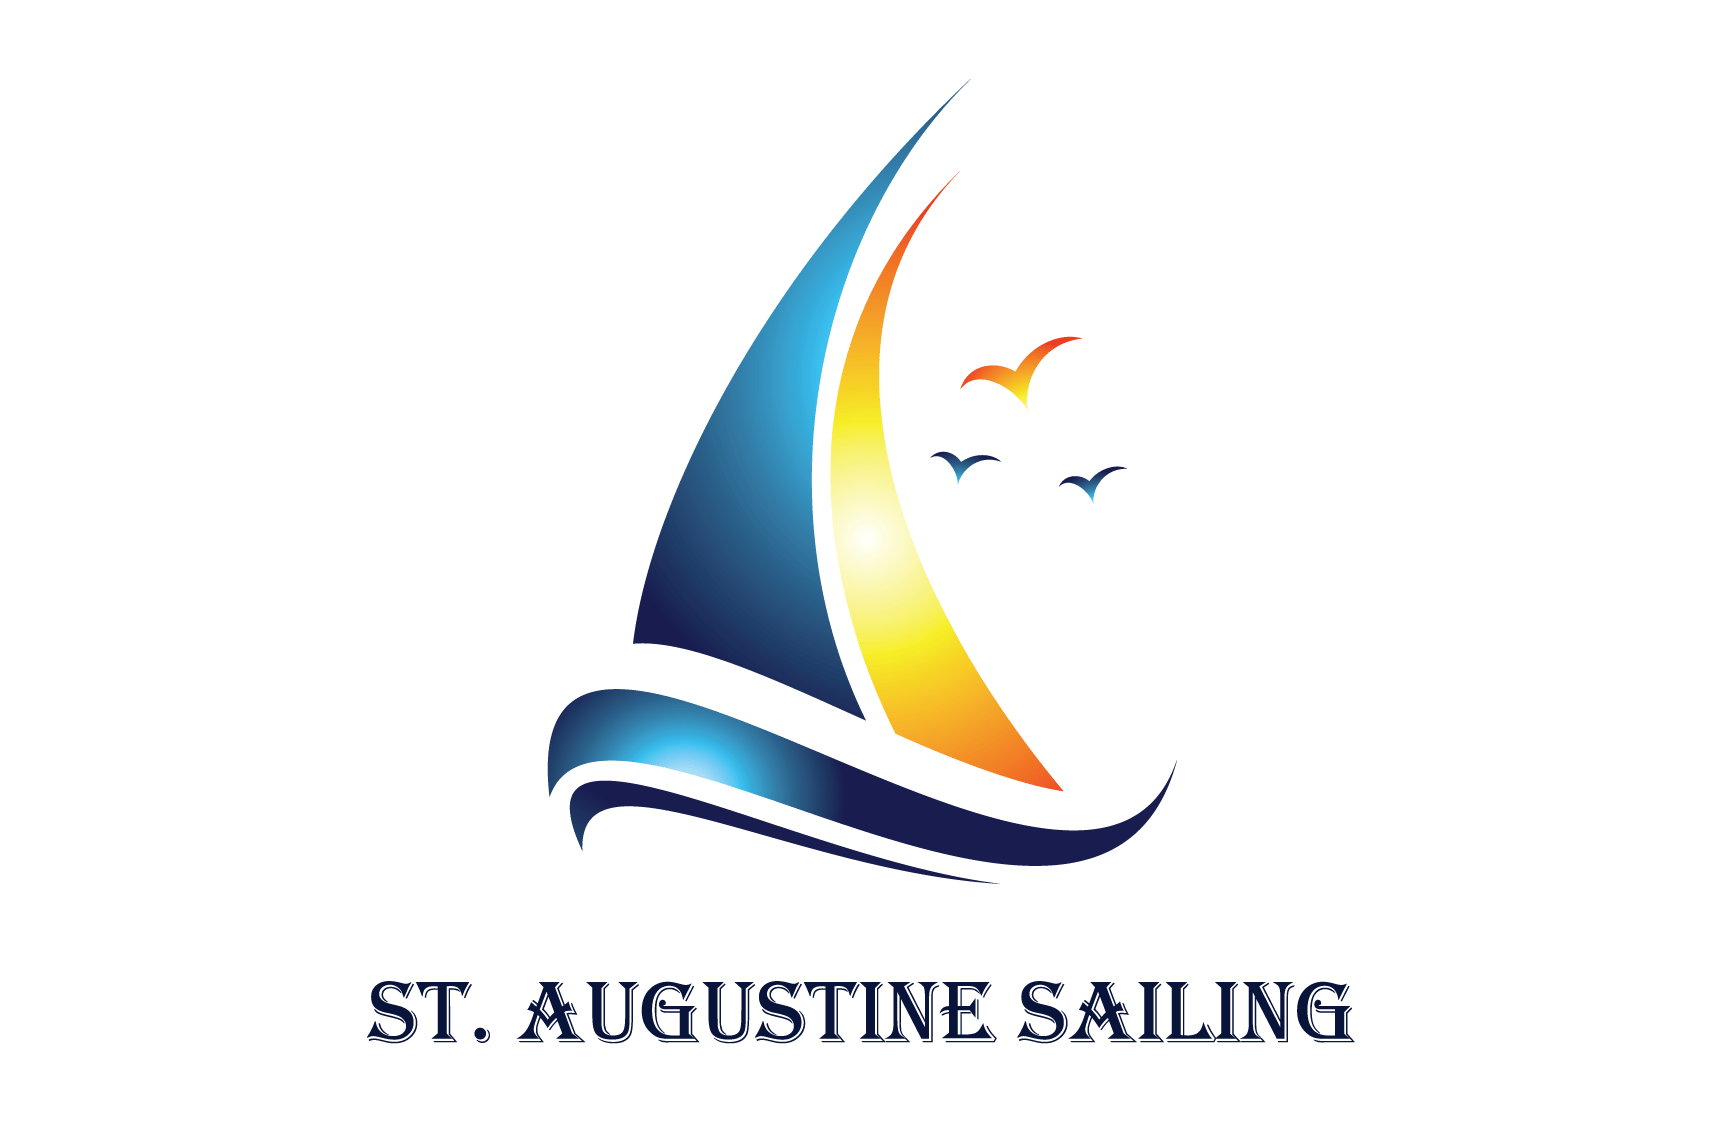 St. Augustine Sailing